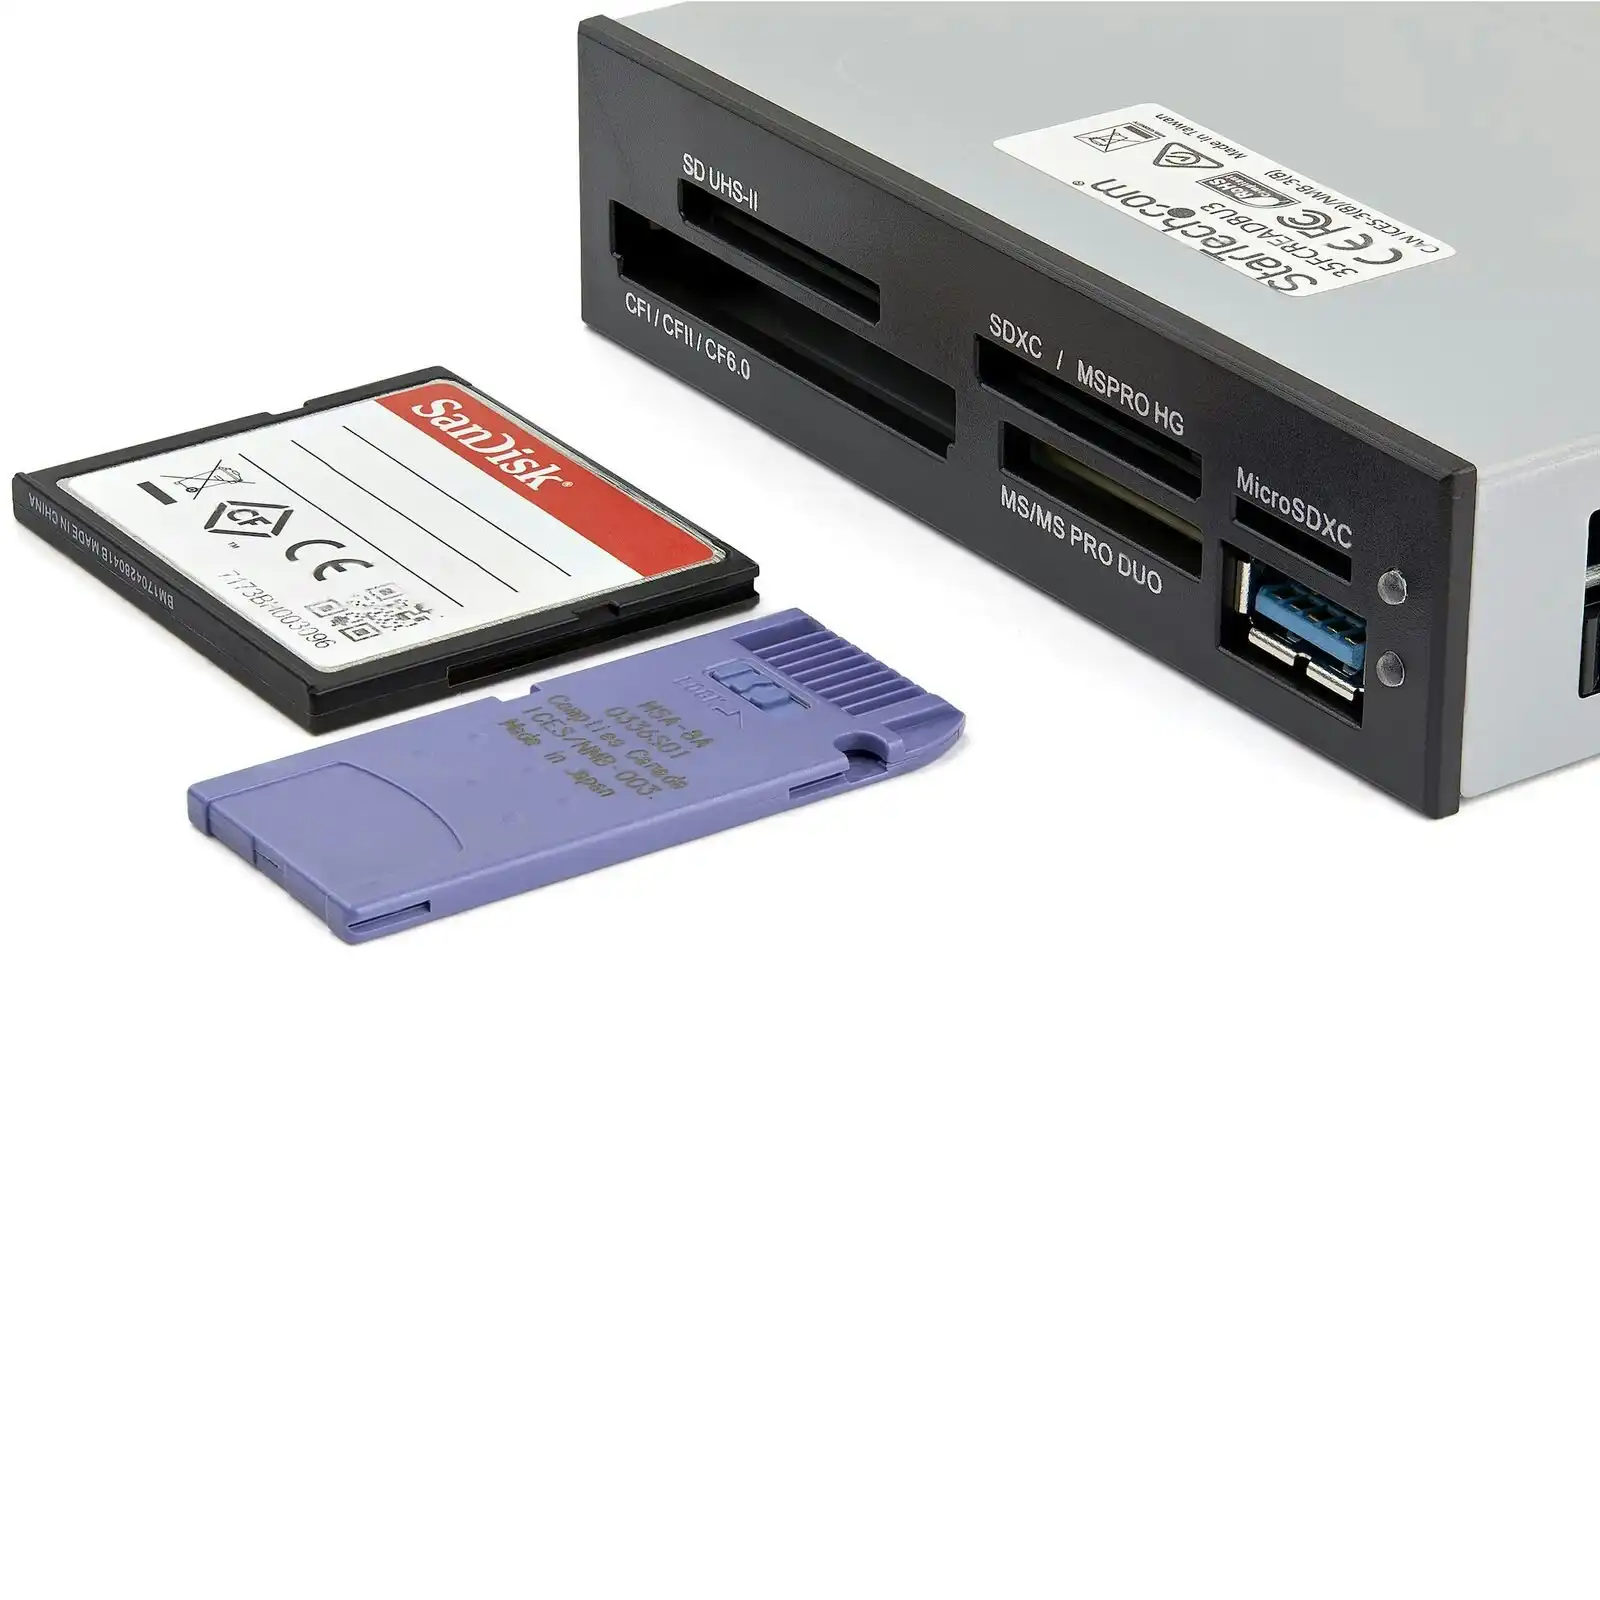 Star Tech USB 3.0 Fast Internal MicroSD/CompactFlash Multi-Card Reader/Adapter